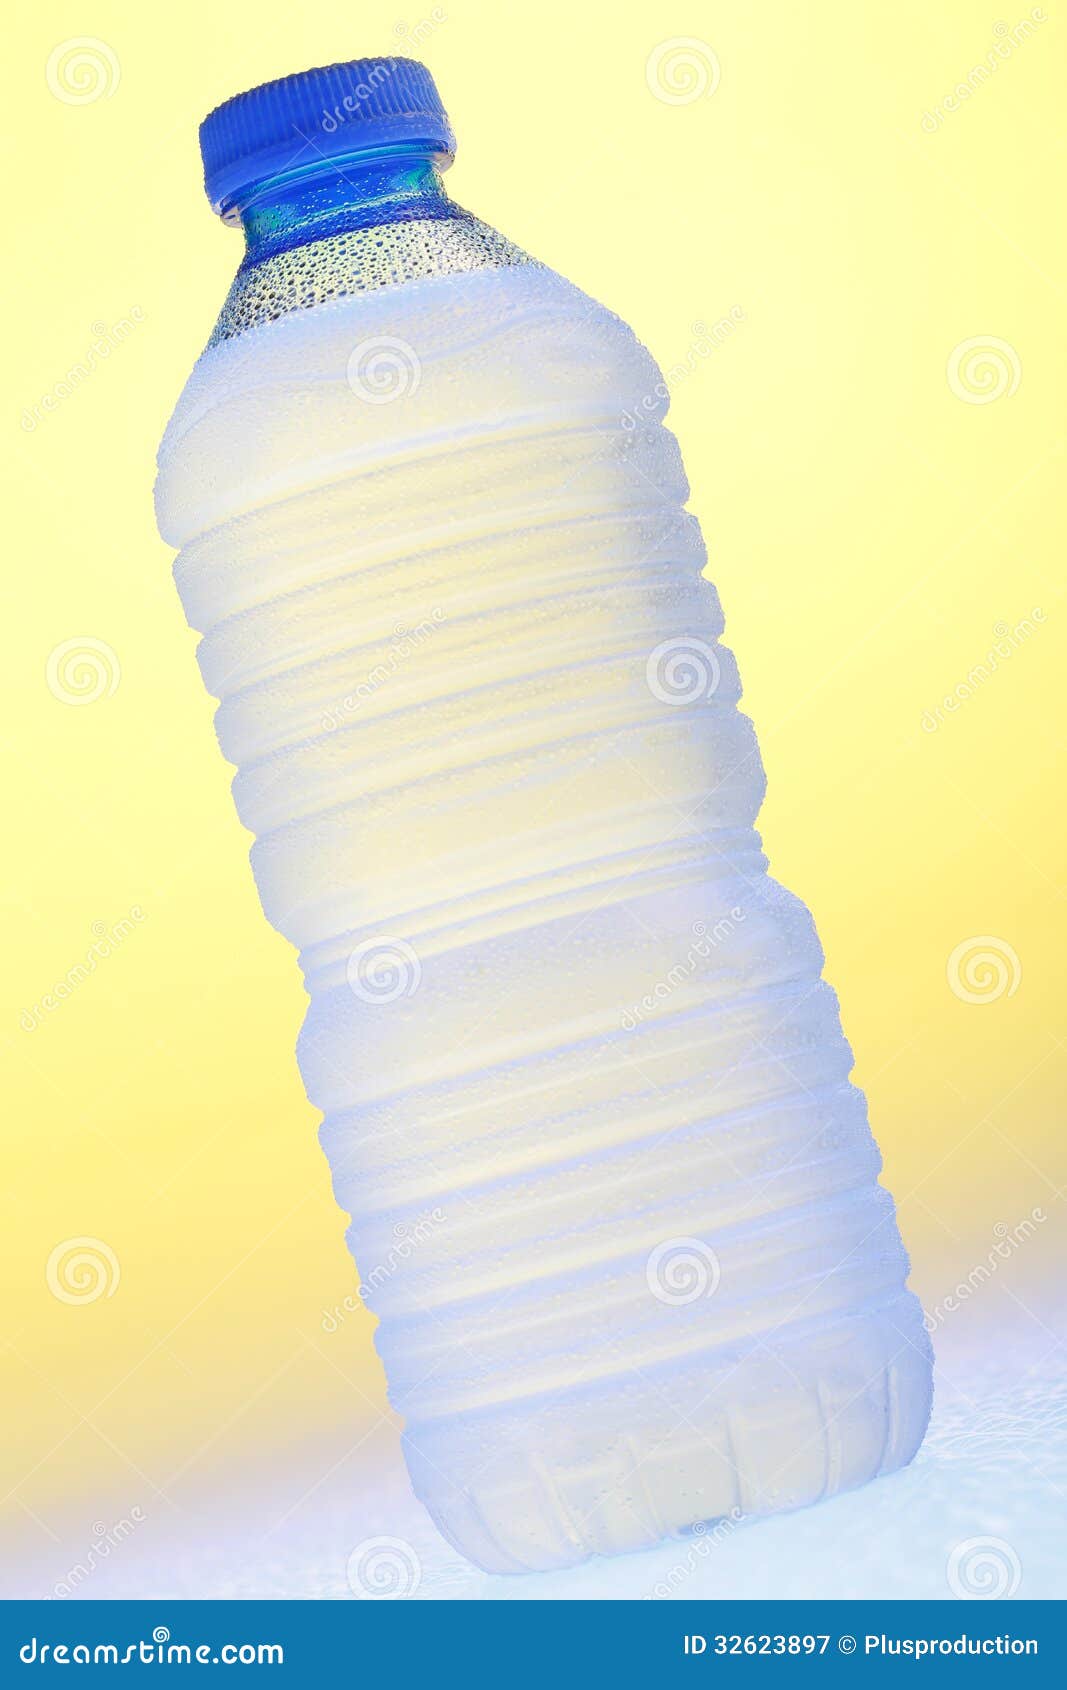 Fresh water bottle stock image. Image of wash, yellow - 32623897